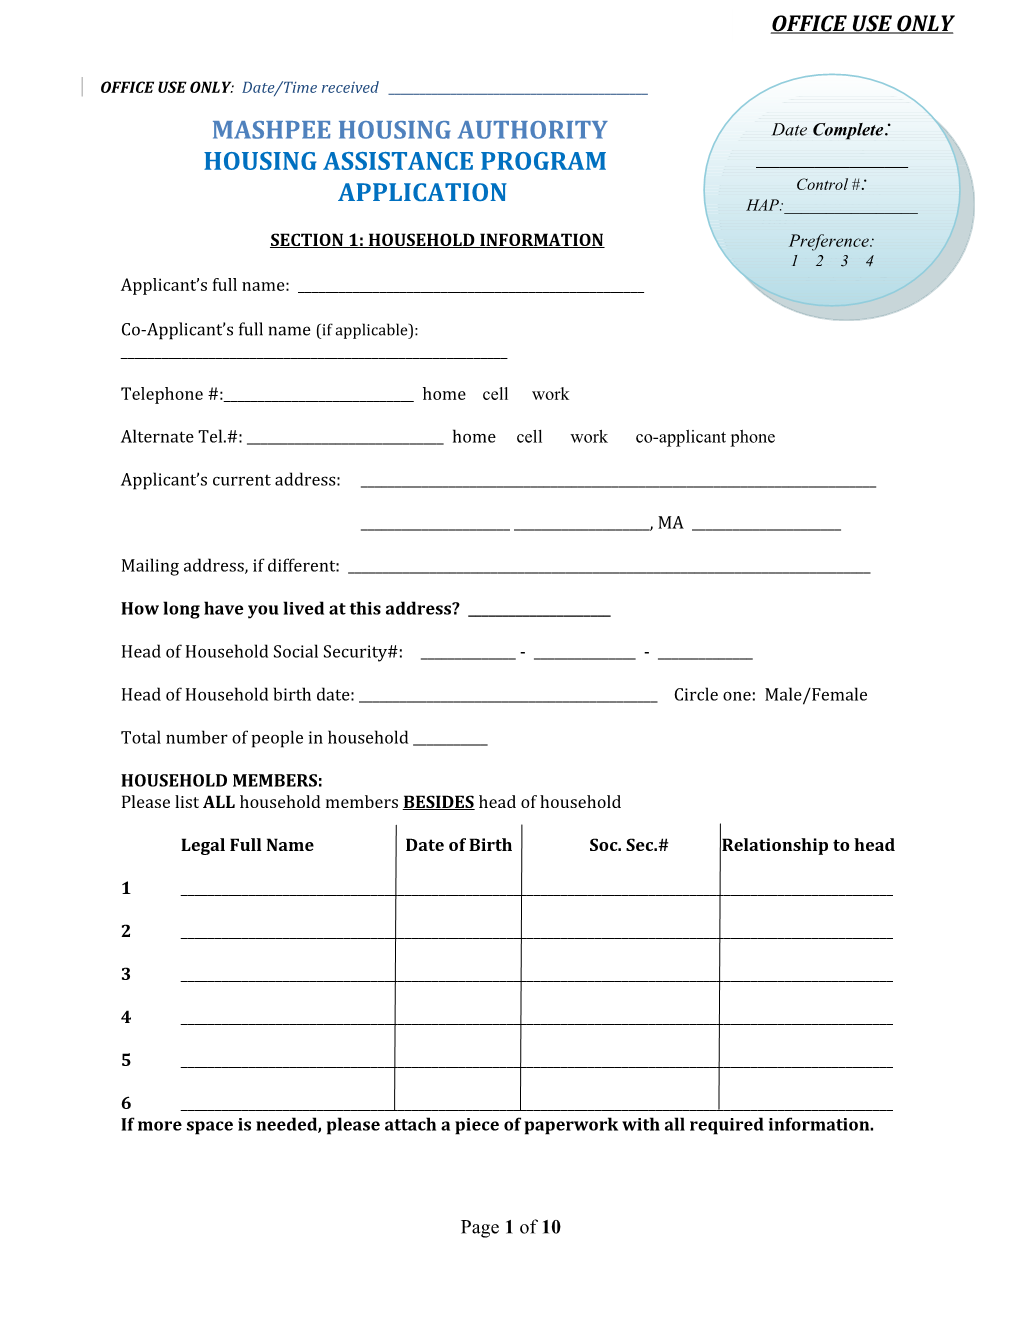 Housing Assistance Program Application